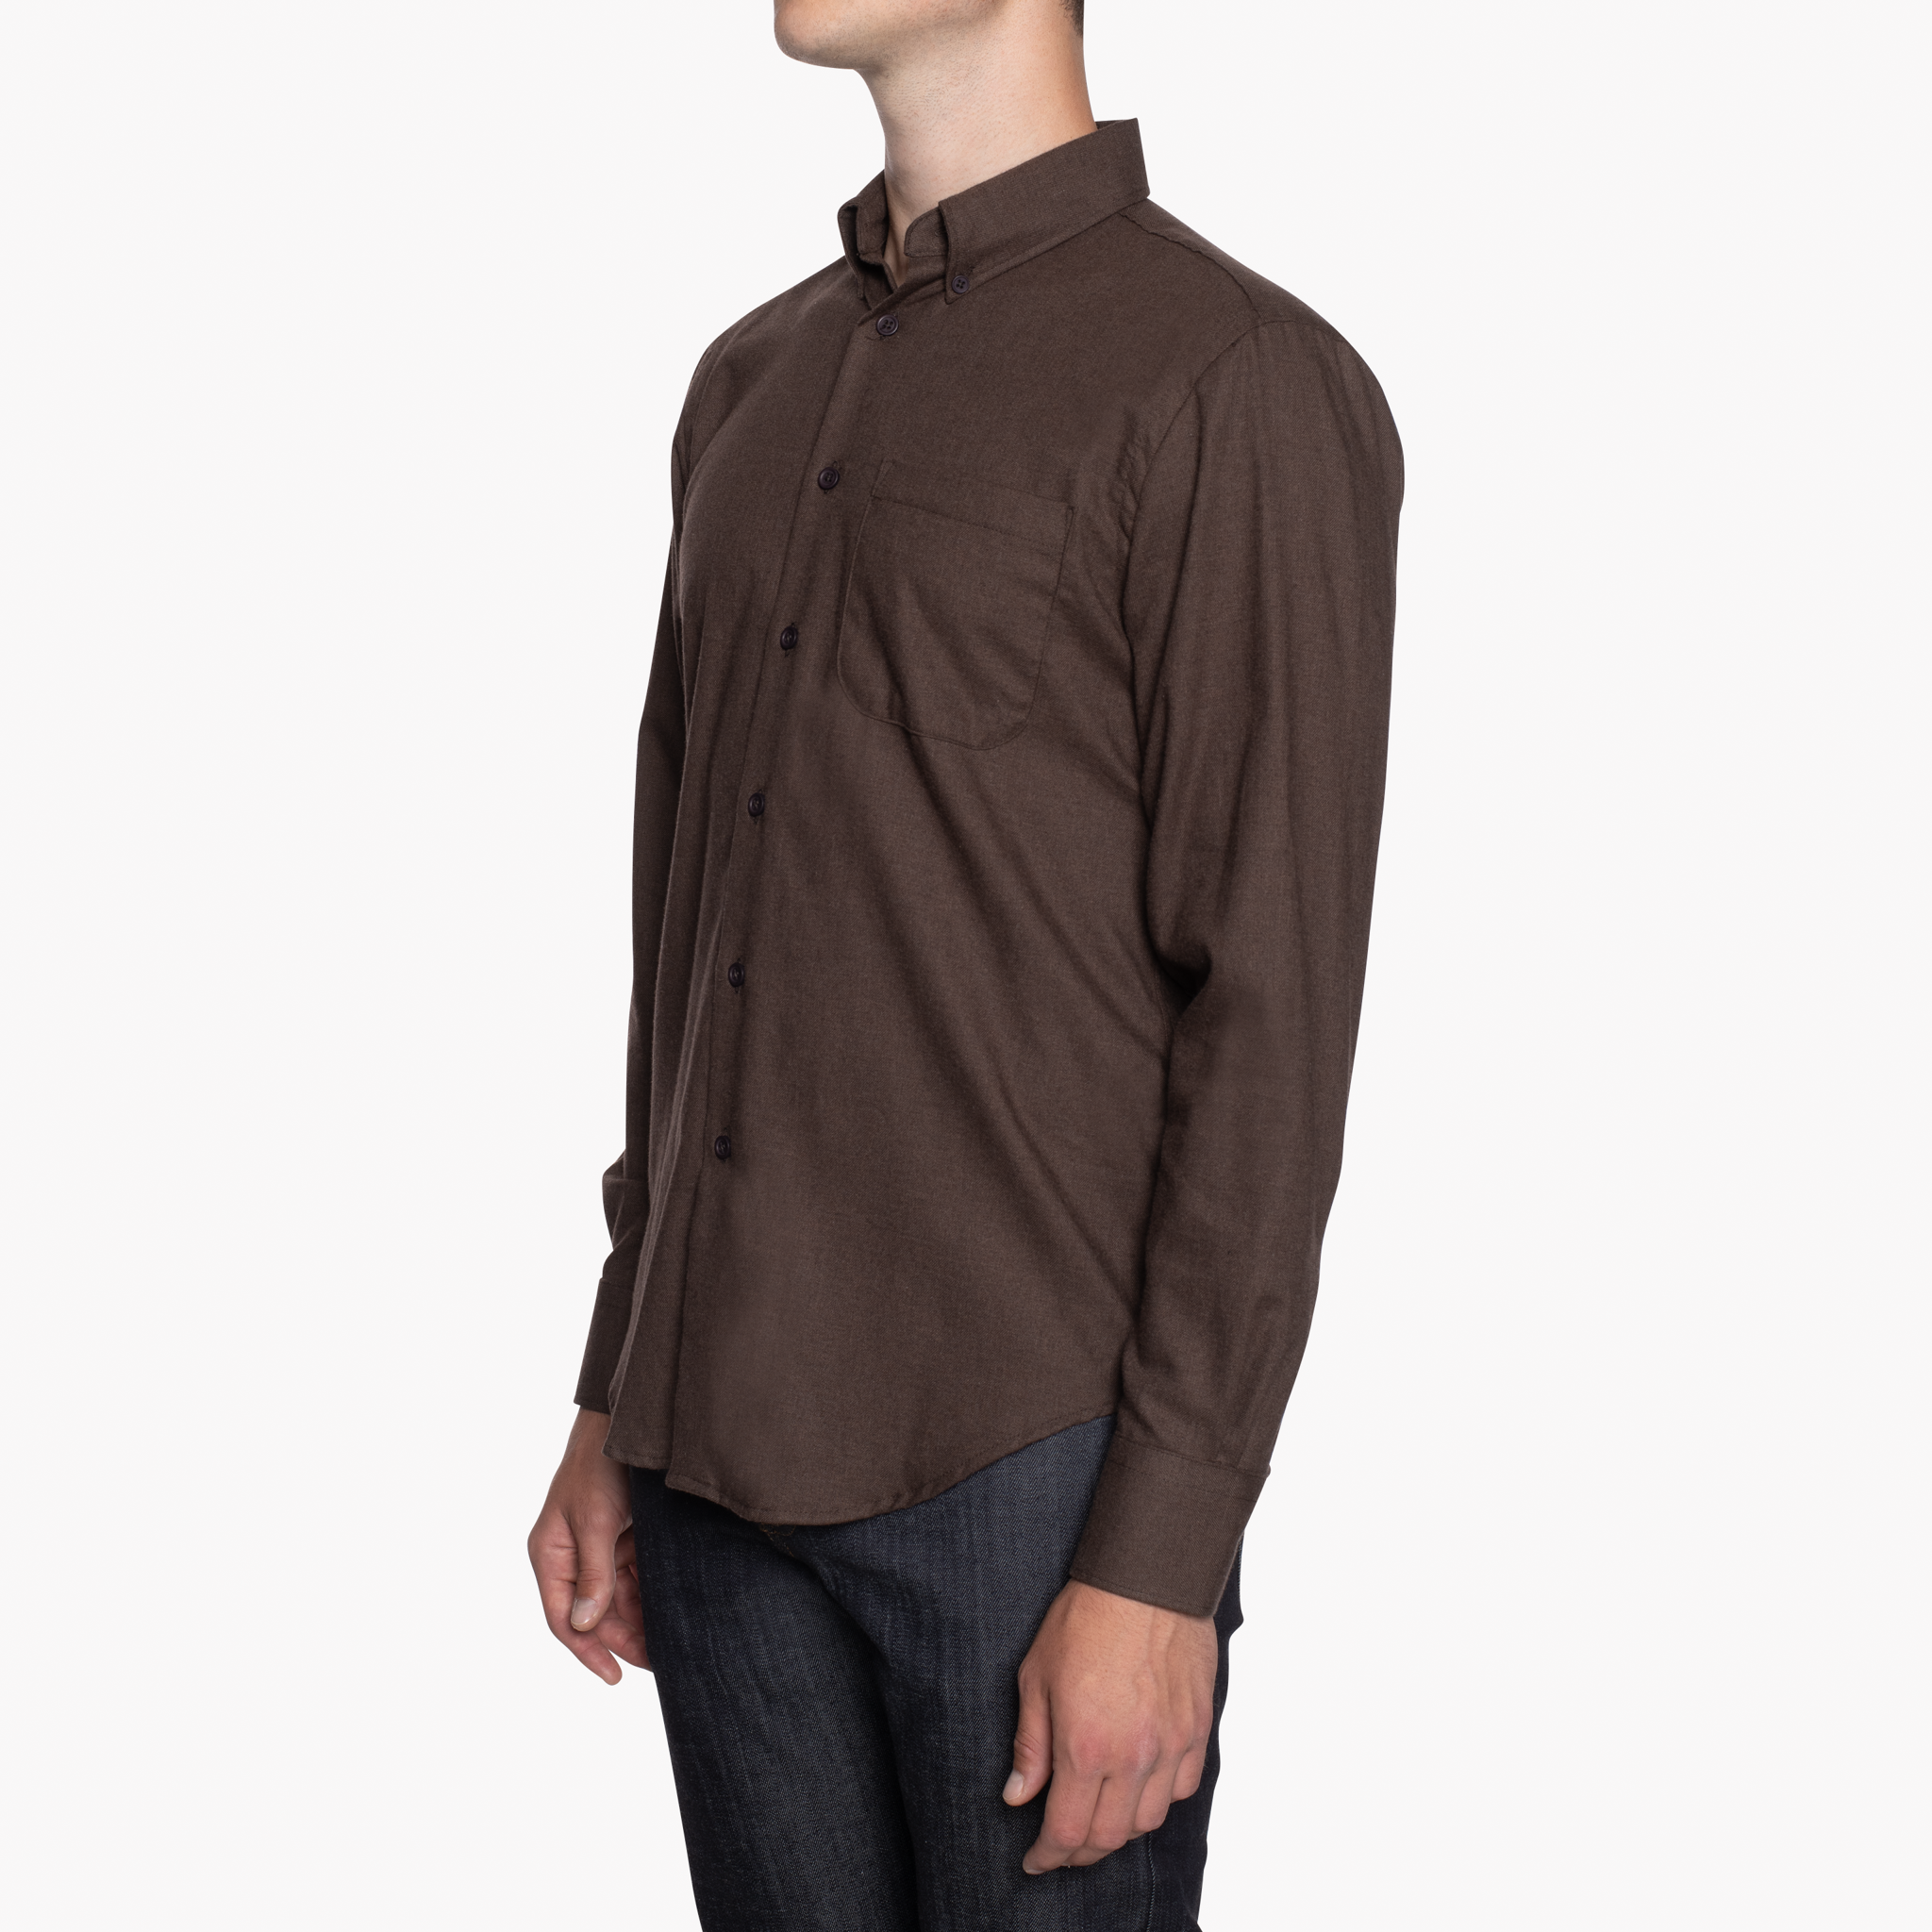  Easy Shirt - Soft Twill - Brown - side 